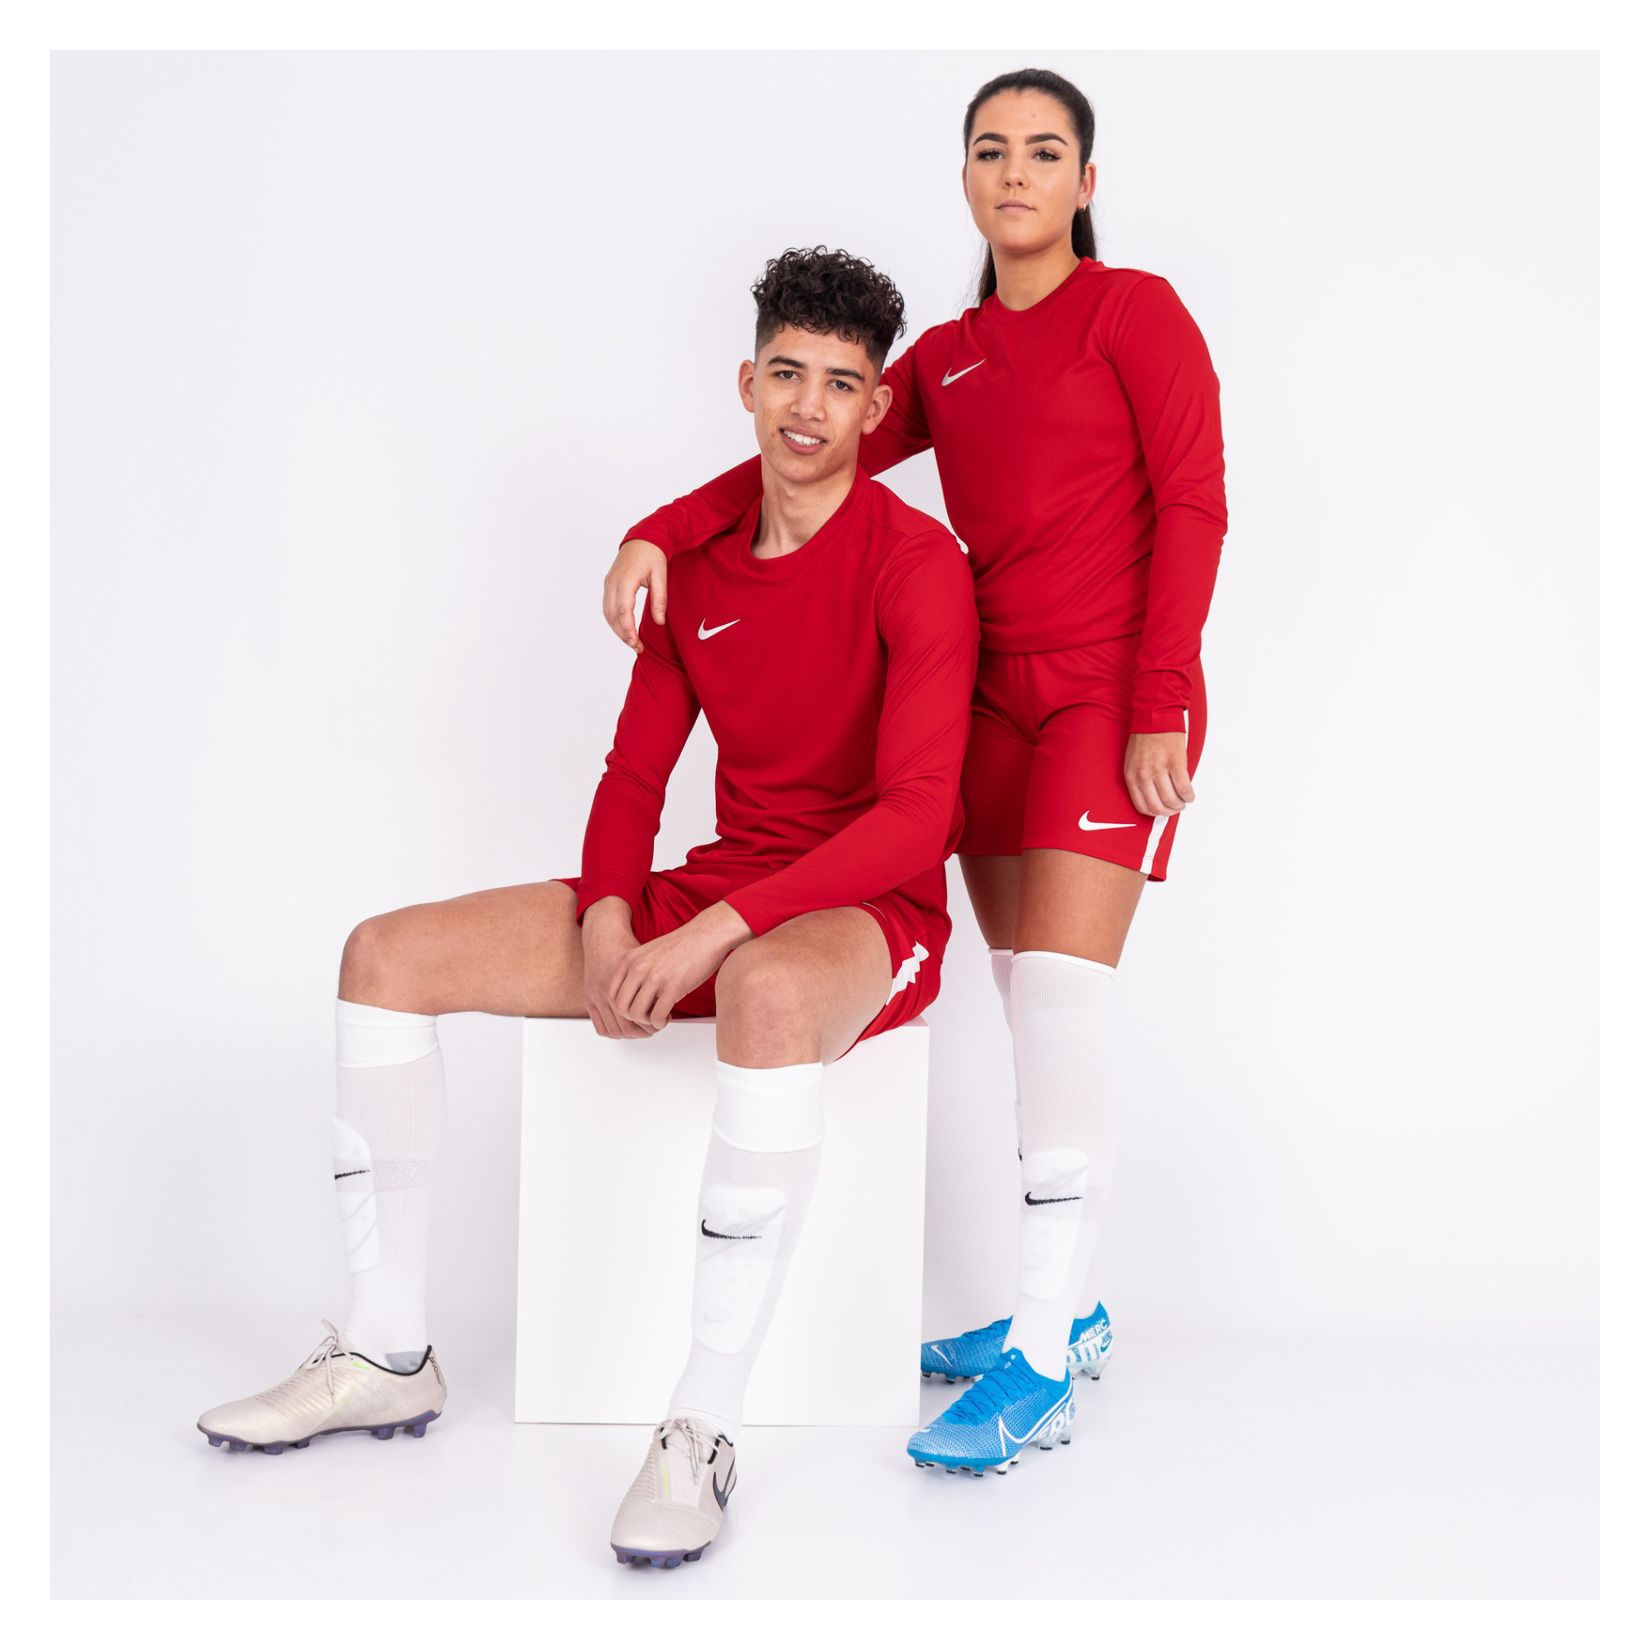 Nike Park VII Dri-FIT Long Sleeve Football Shirt - Kitlocker.com